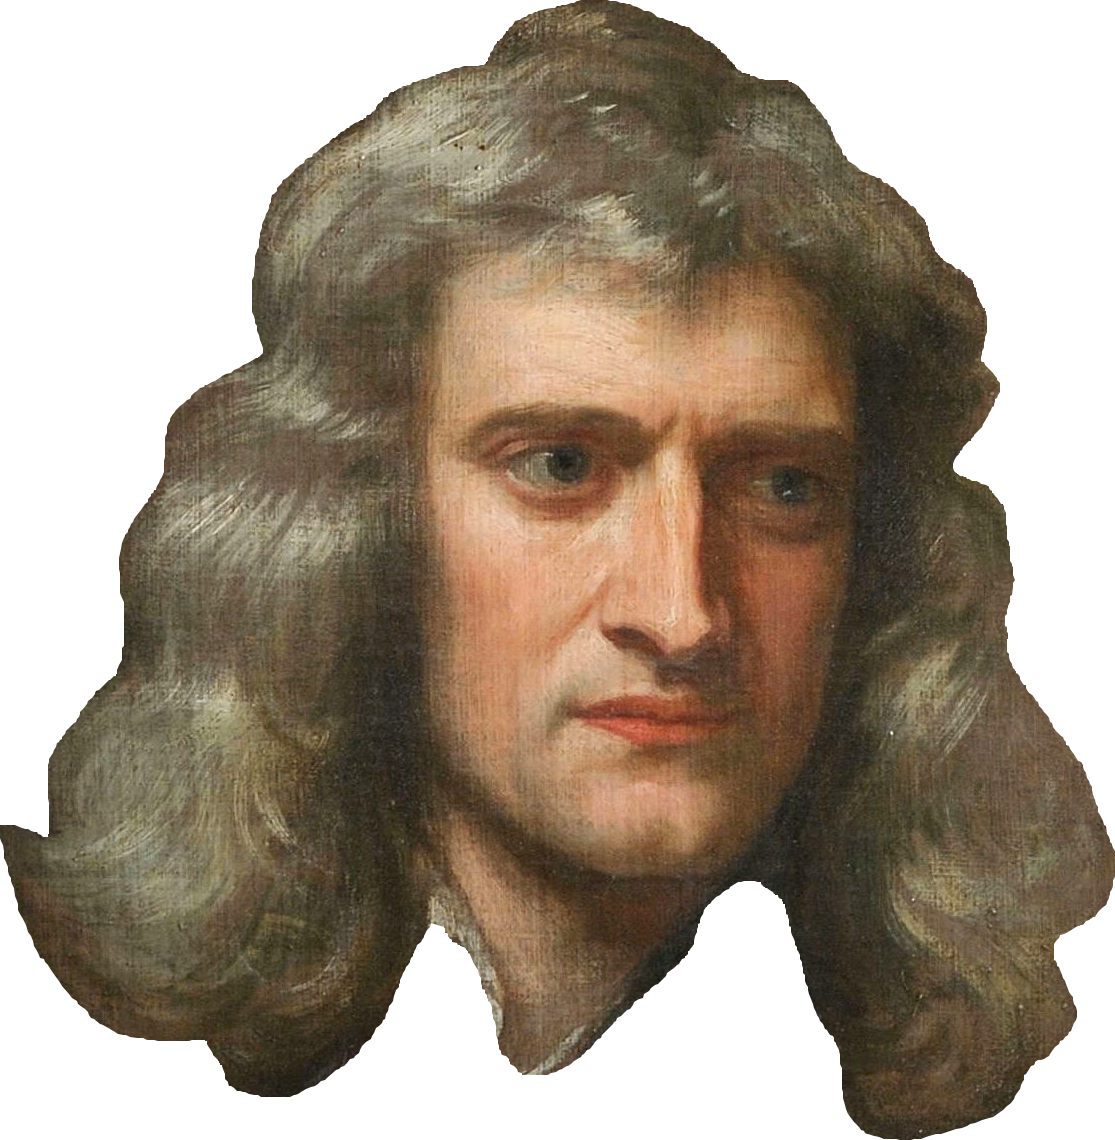 The face of Sir Isaac Newton